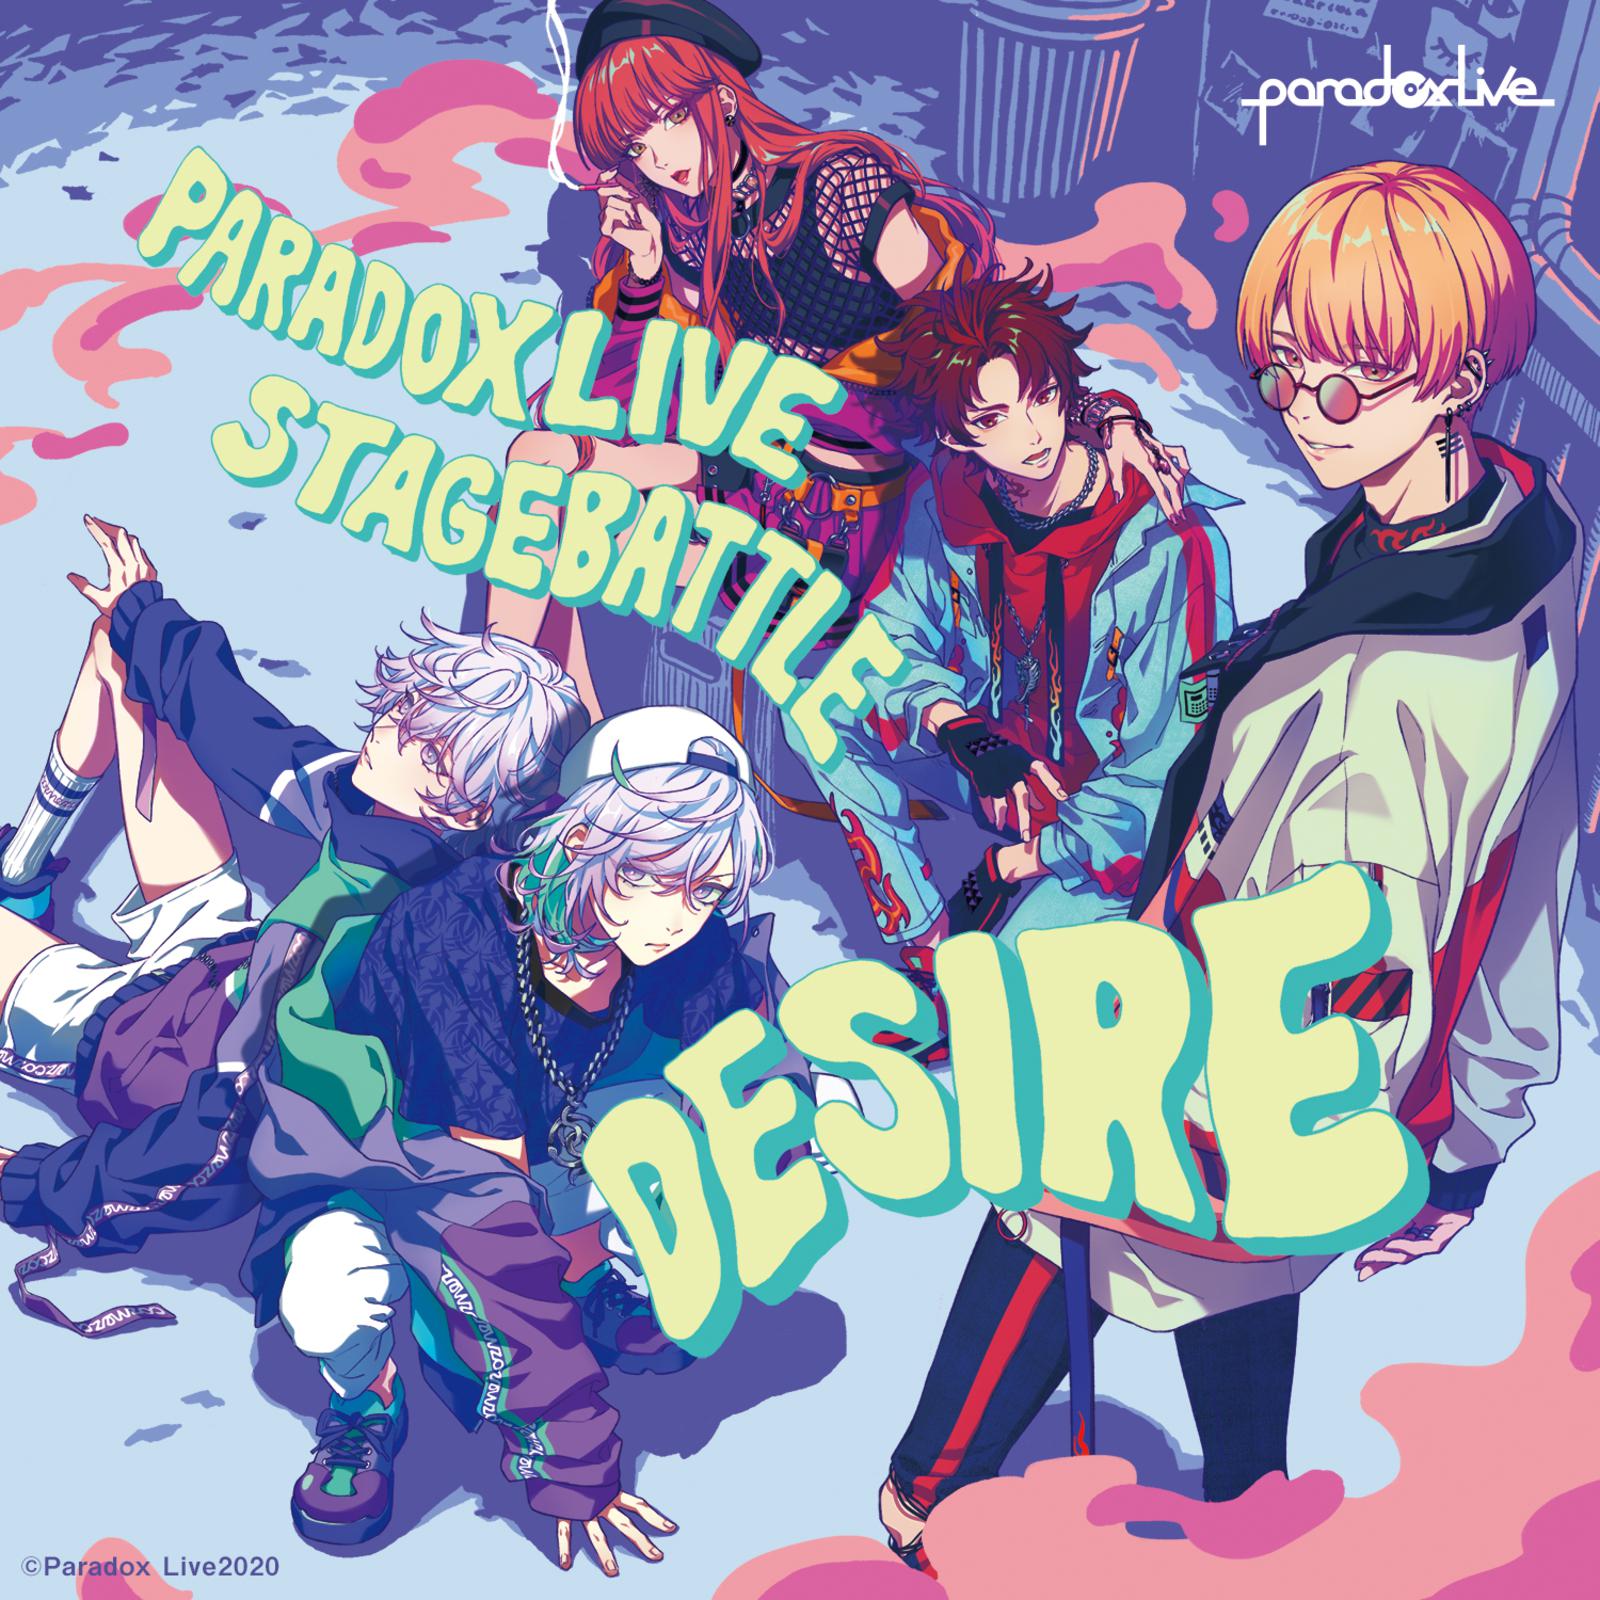 Paradox Live Stage Battle "DESIRE"专辑